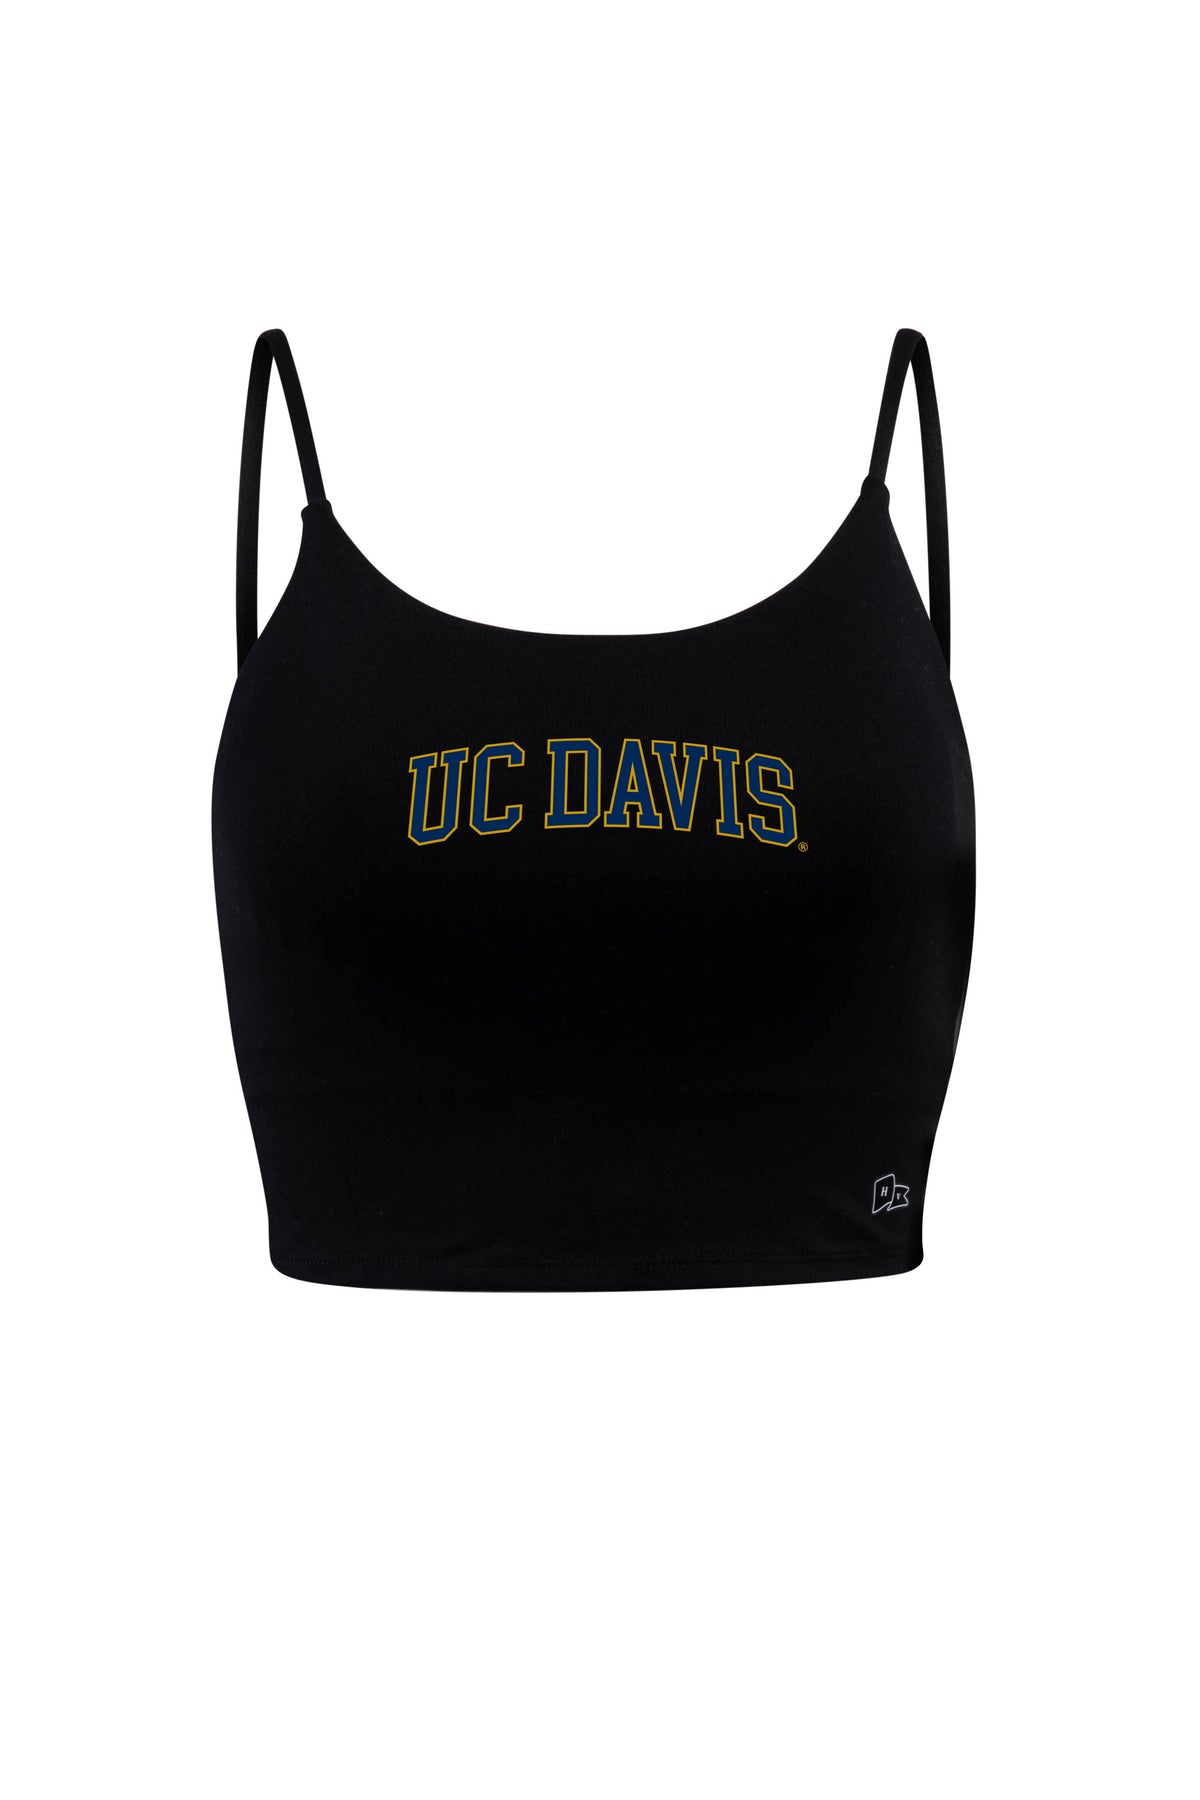 University of California Davis Bra Tank Top